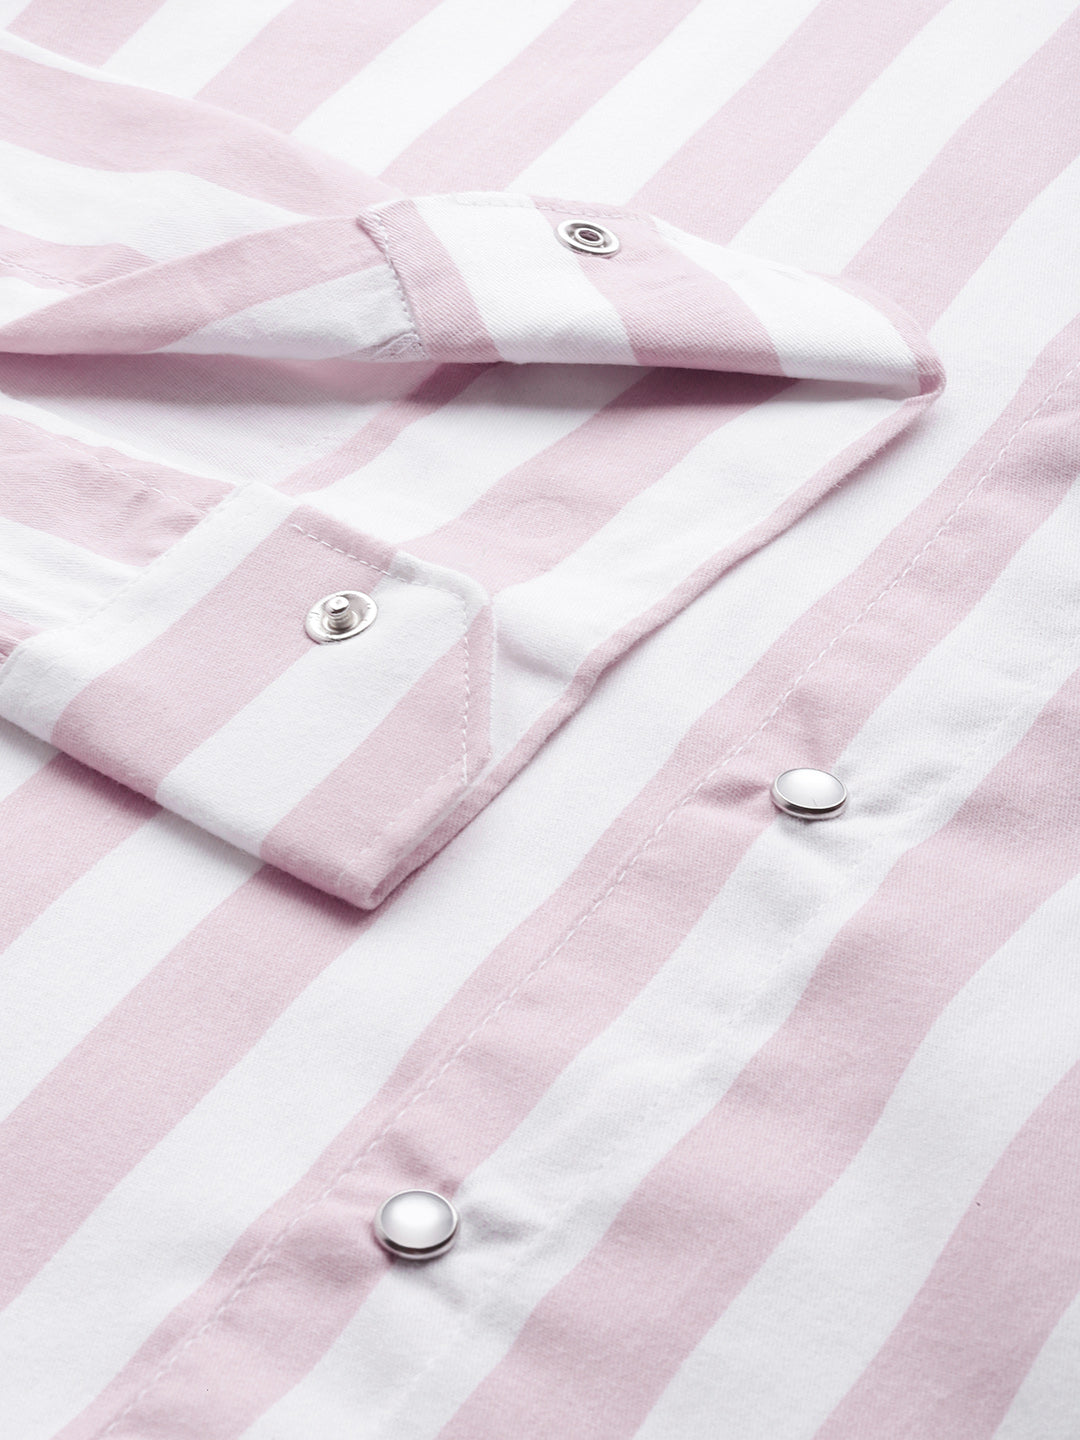 Luxrio Men's Stripped Mandarin Collared Full Sleeves Casual Shirt Pink